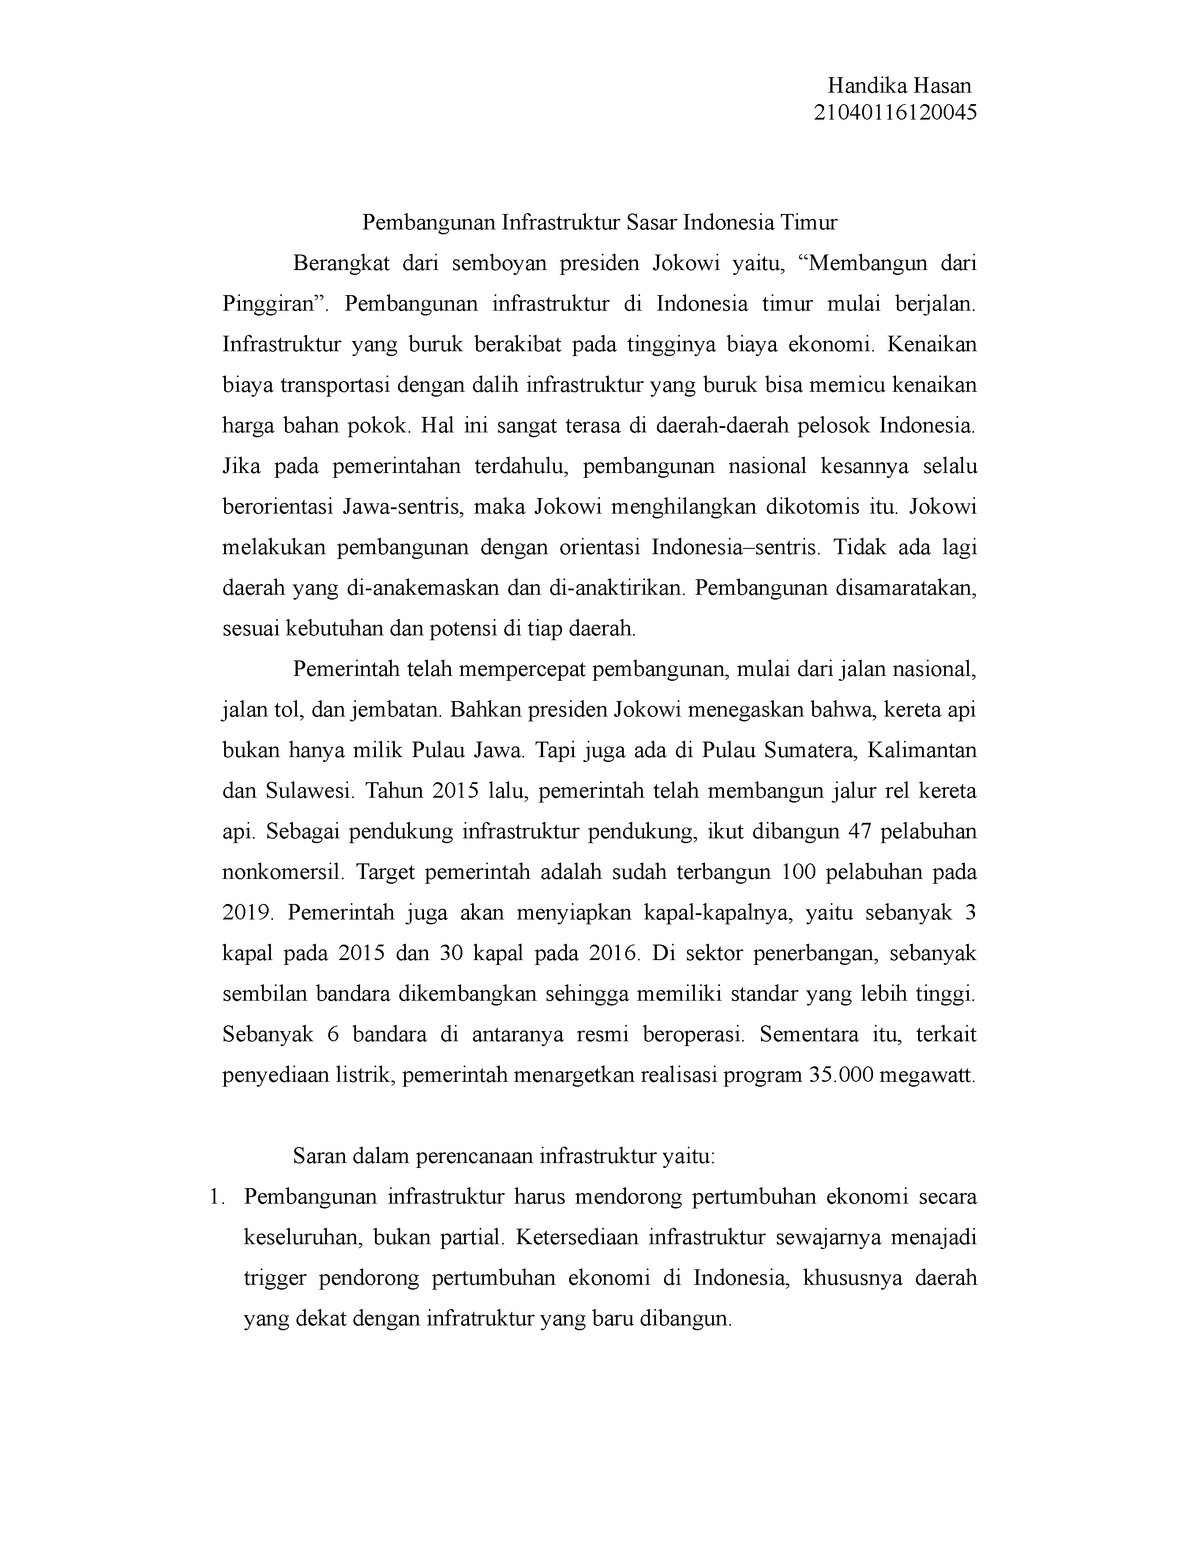 contoh contoh essay bahasa indonesia